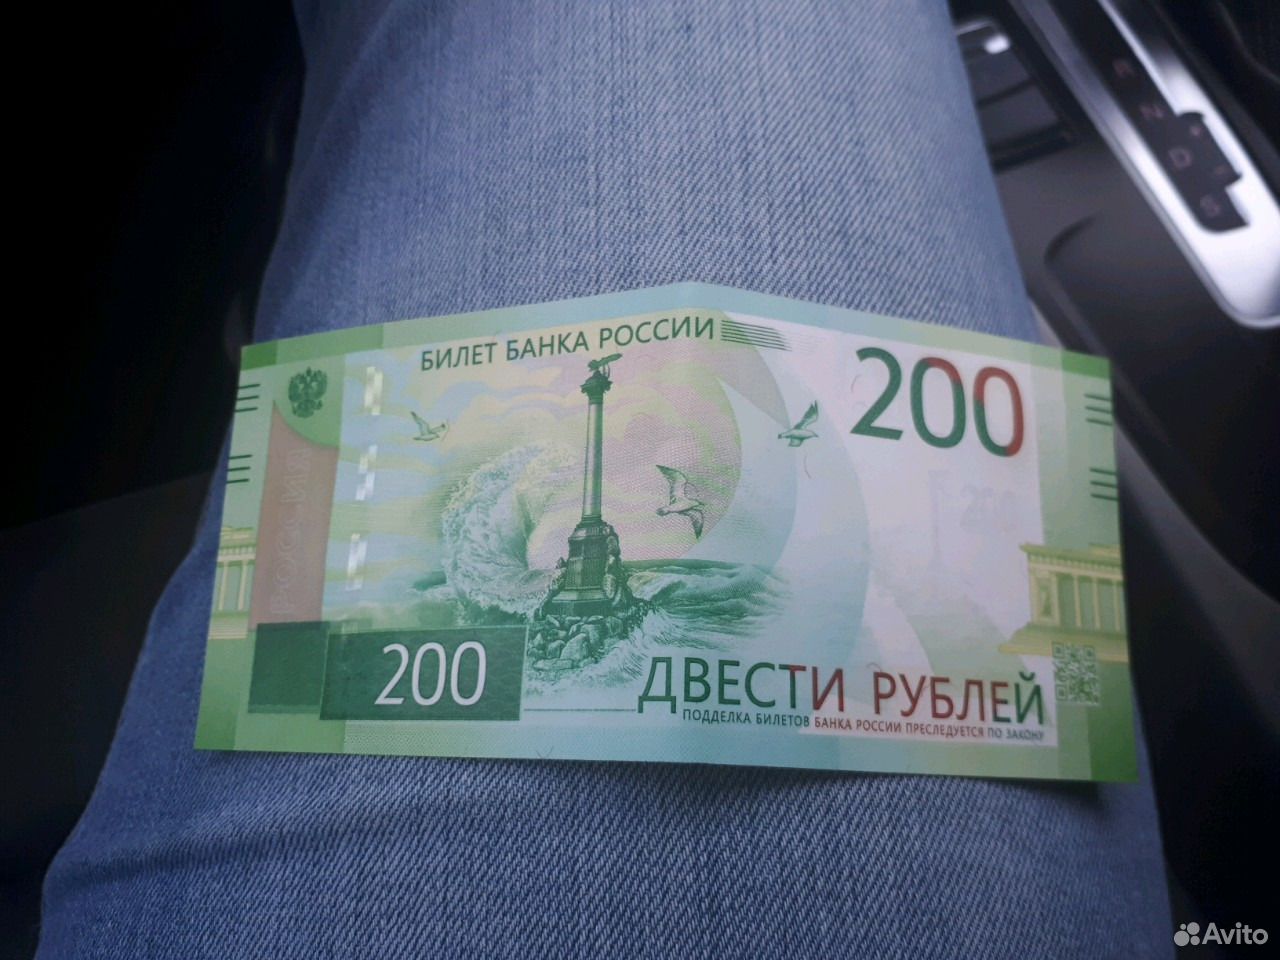 170 200 рублей. 200 Рублей. Банкнота 200. Купюра 200 рублей. 200 Рублей банкнота.